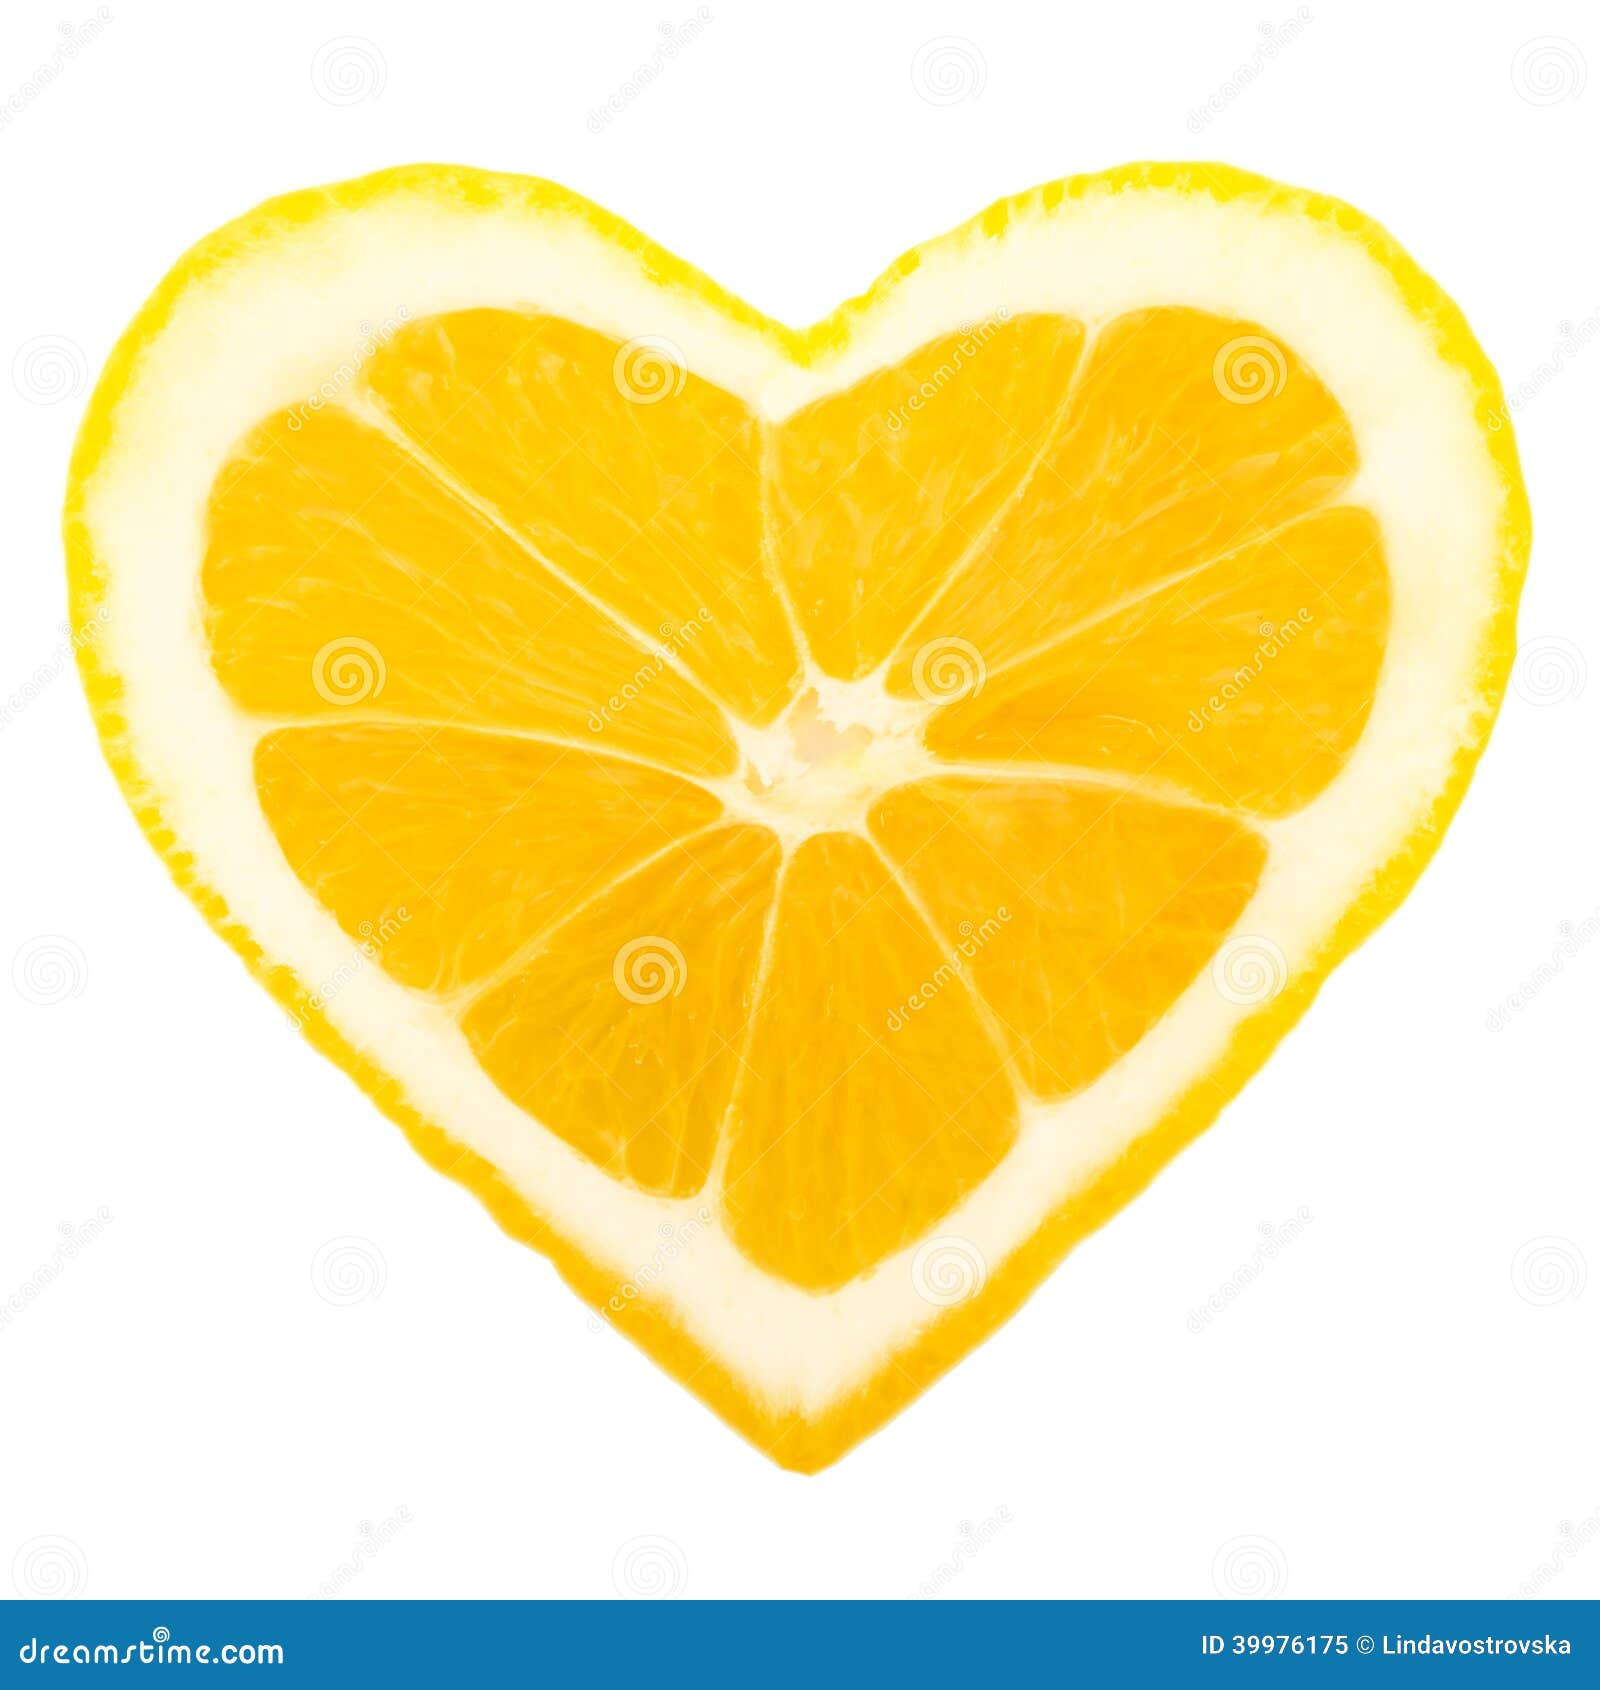 lemon shape clipart - photo #7